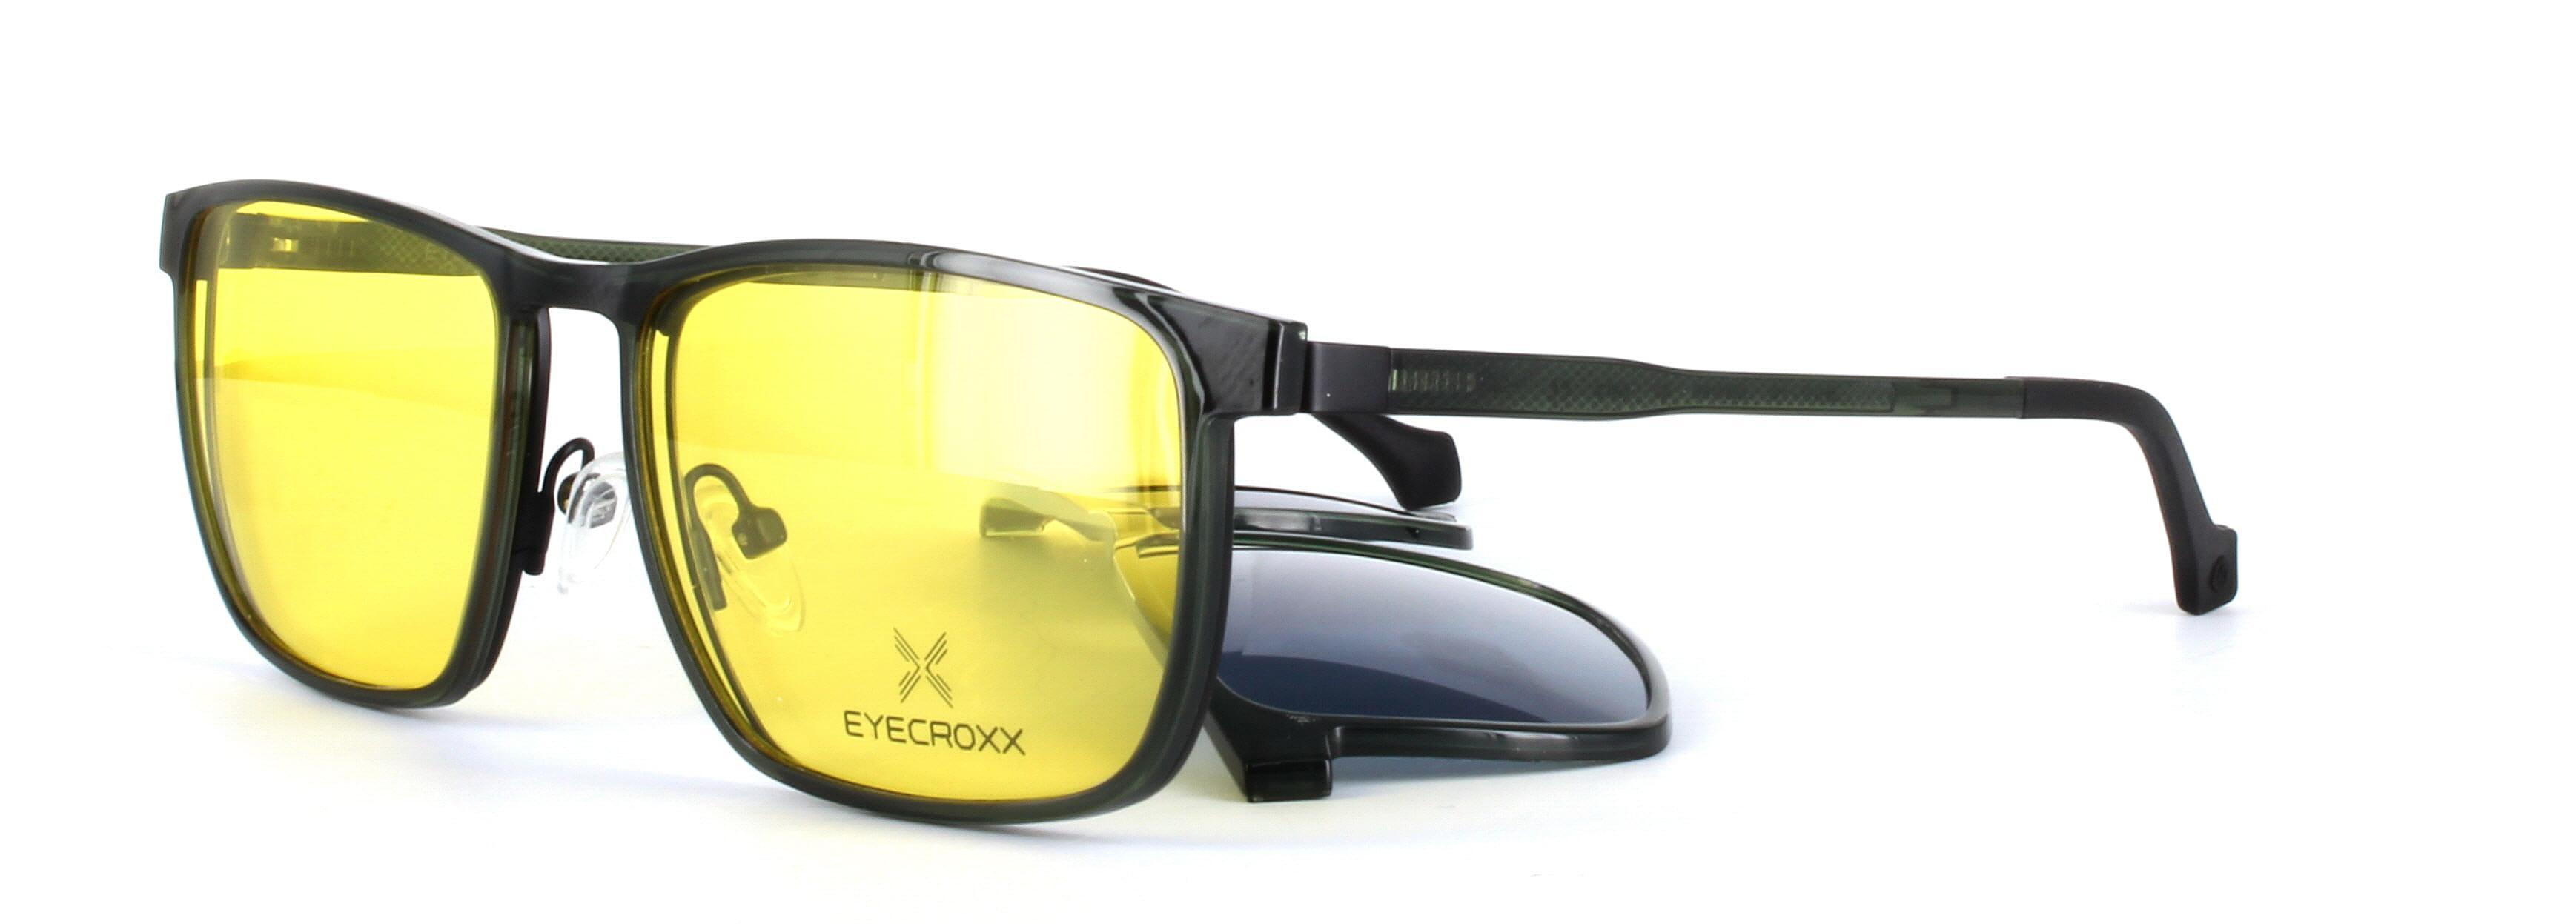 Eyecroxx 601-C2 Black Full Rim Metal Glasses - Image View 2